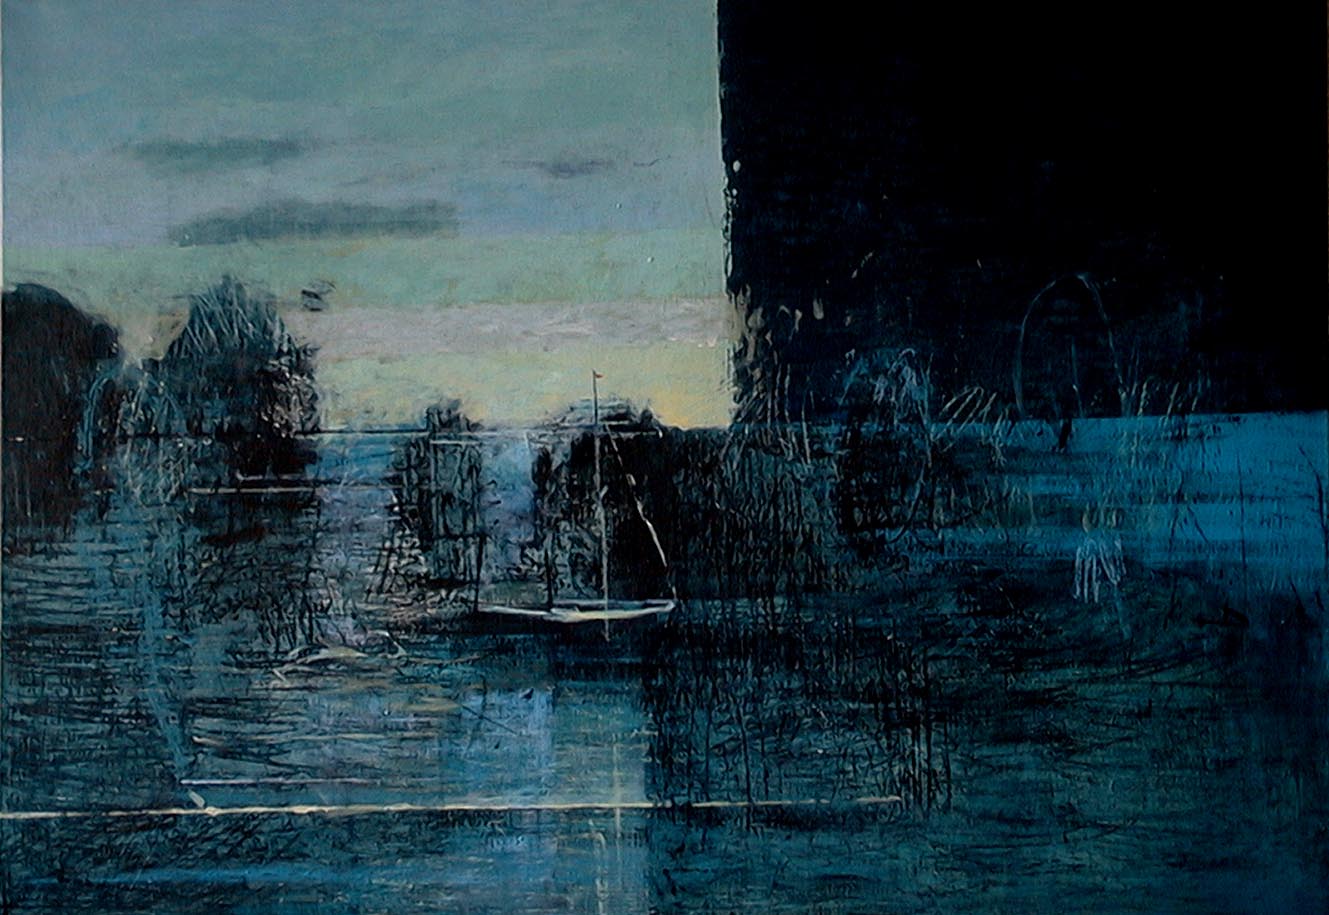 Mendrek Pawel 
"Life of the Horizon 18 Uhr 05", 2002
Acryl / Leinwand
100 x 140 cm